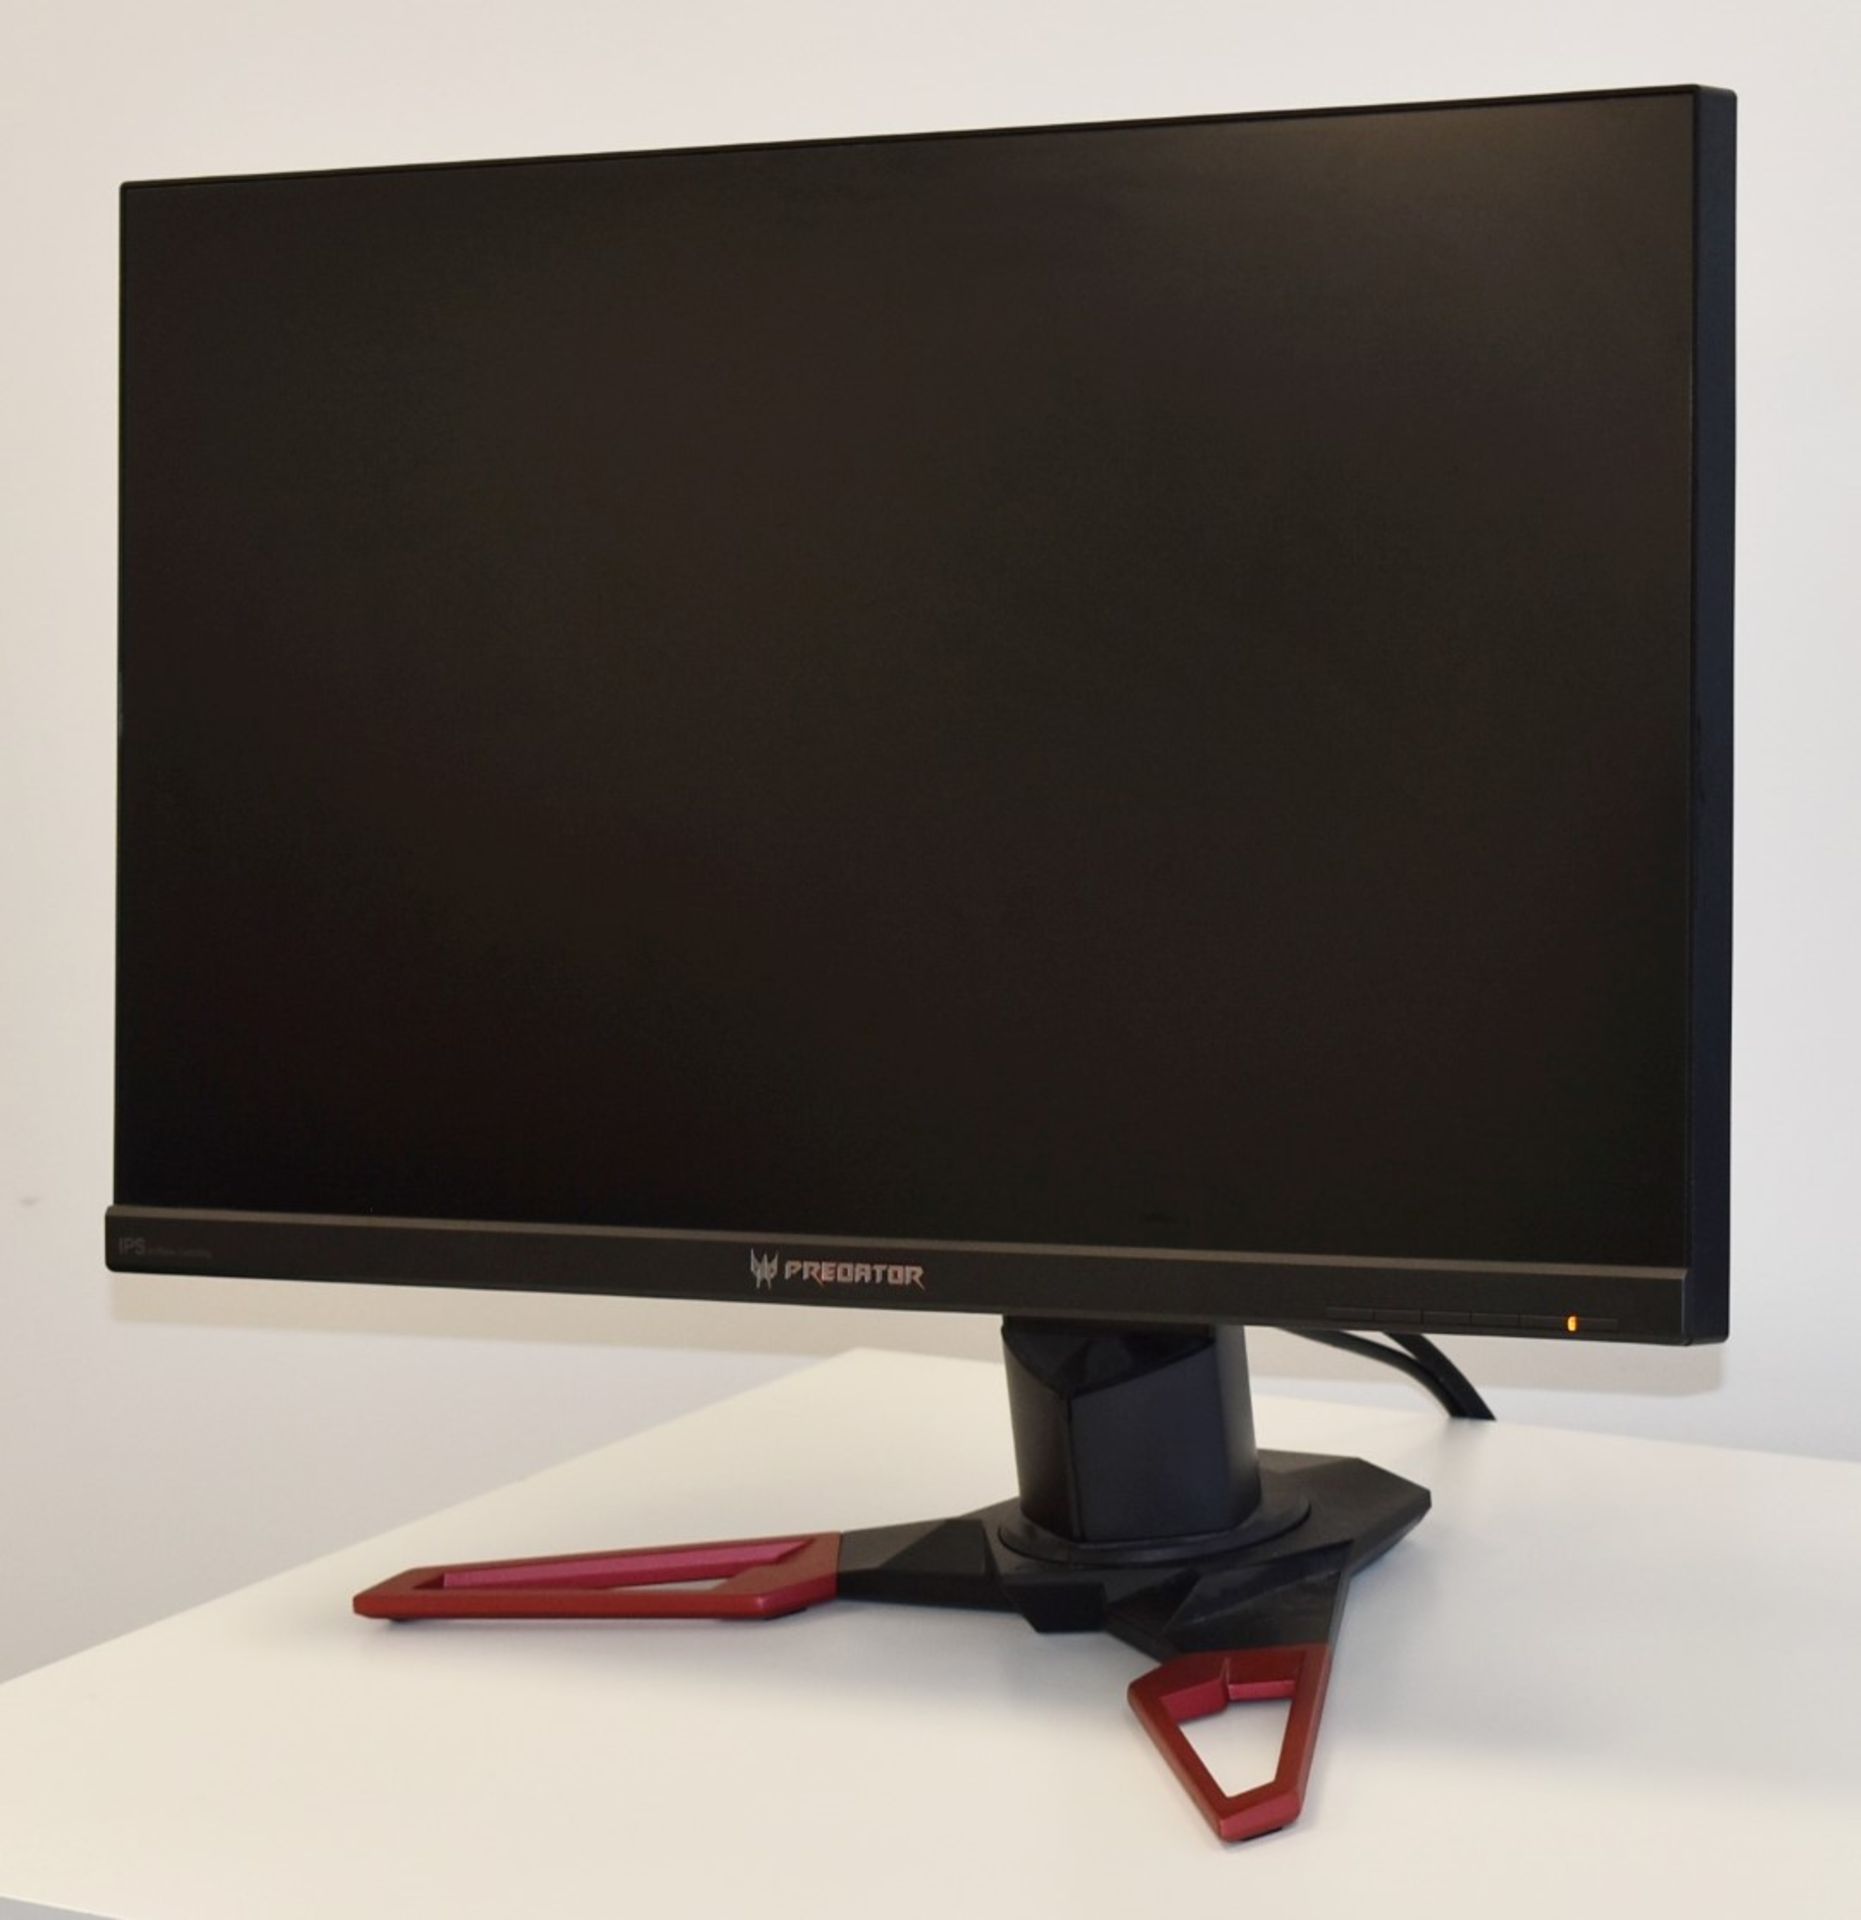 1 x Acer Predator 27 Inch 1440p LED Gaming Monitor - Model XB271HU - 2560 x 1440 Resolution - Image 2 of 6